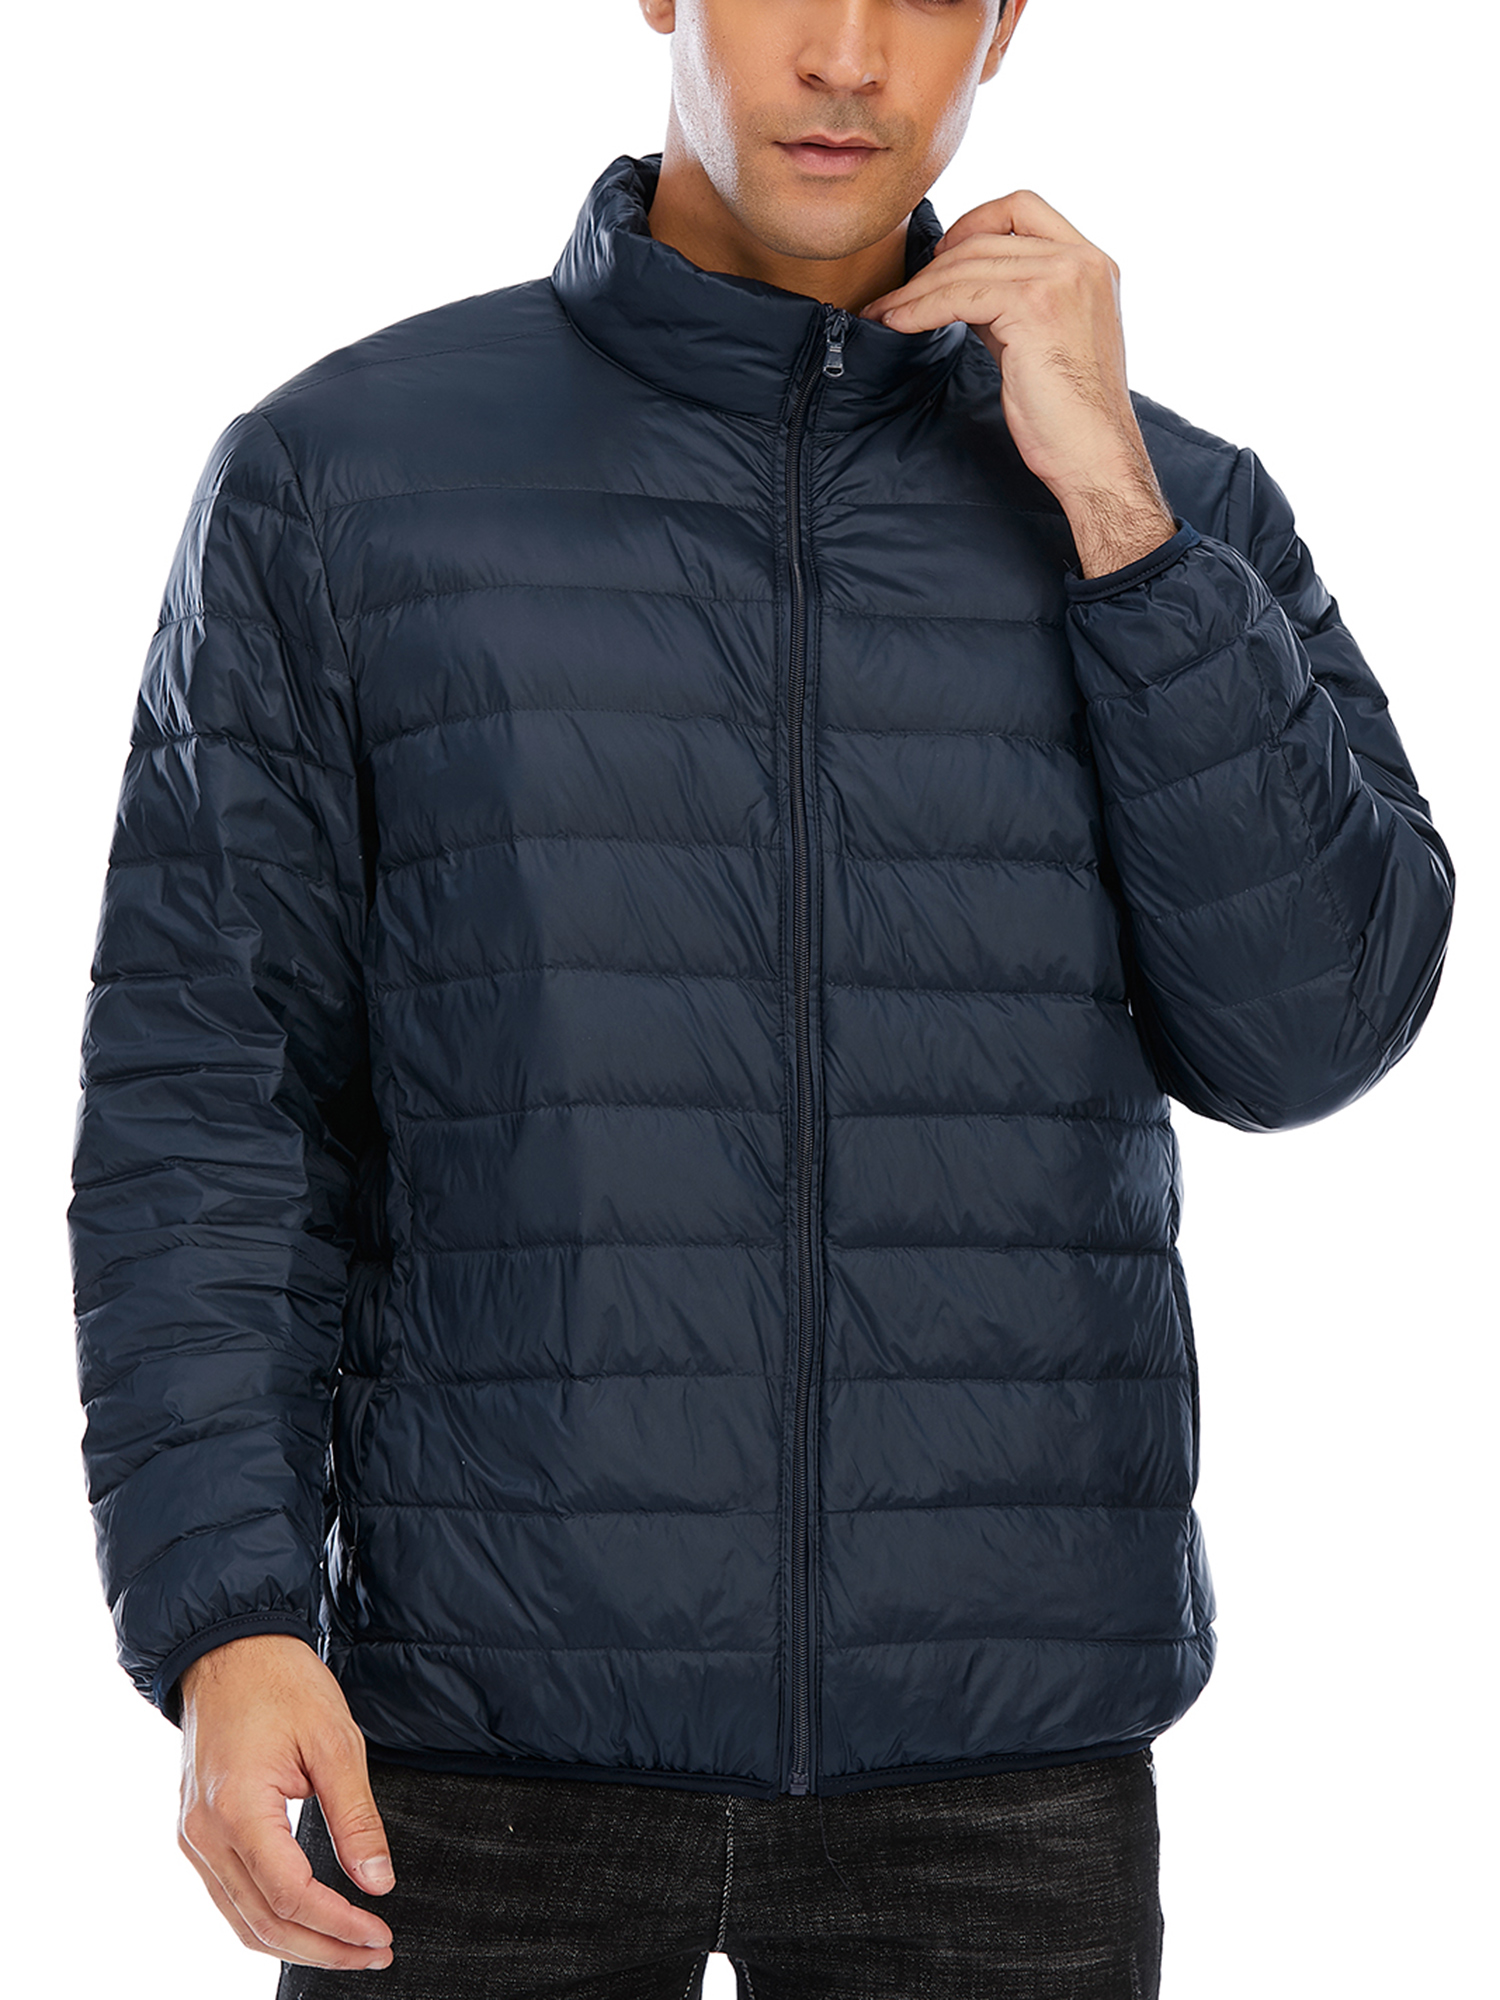 Men's Big & Tall Packable Zipper Puffer Down Jacket Lightweight Water Resistant Down Jacket Insulation Winter Warm Windproof Puffer Jacket - image 1 of 8